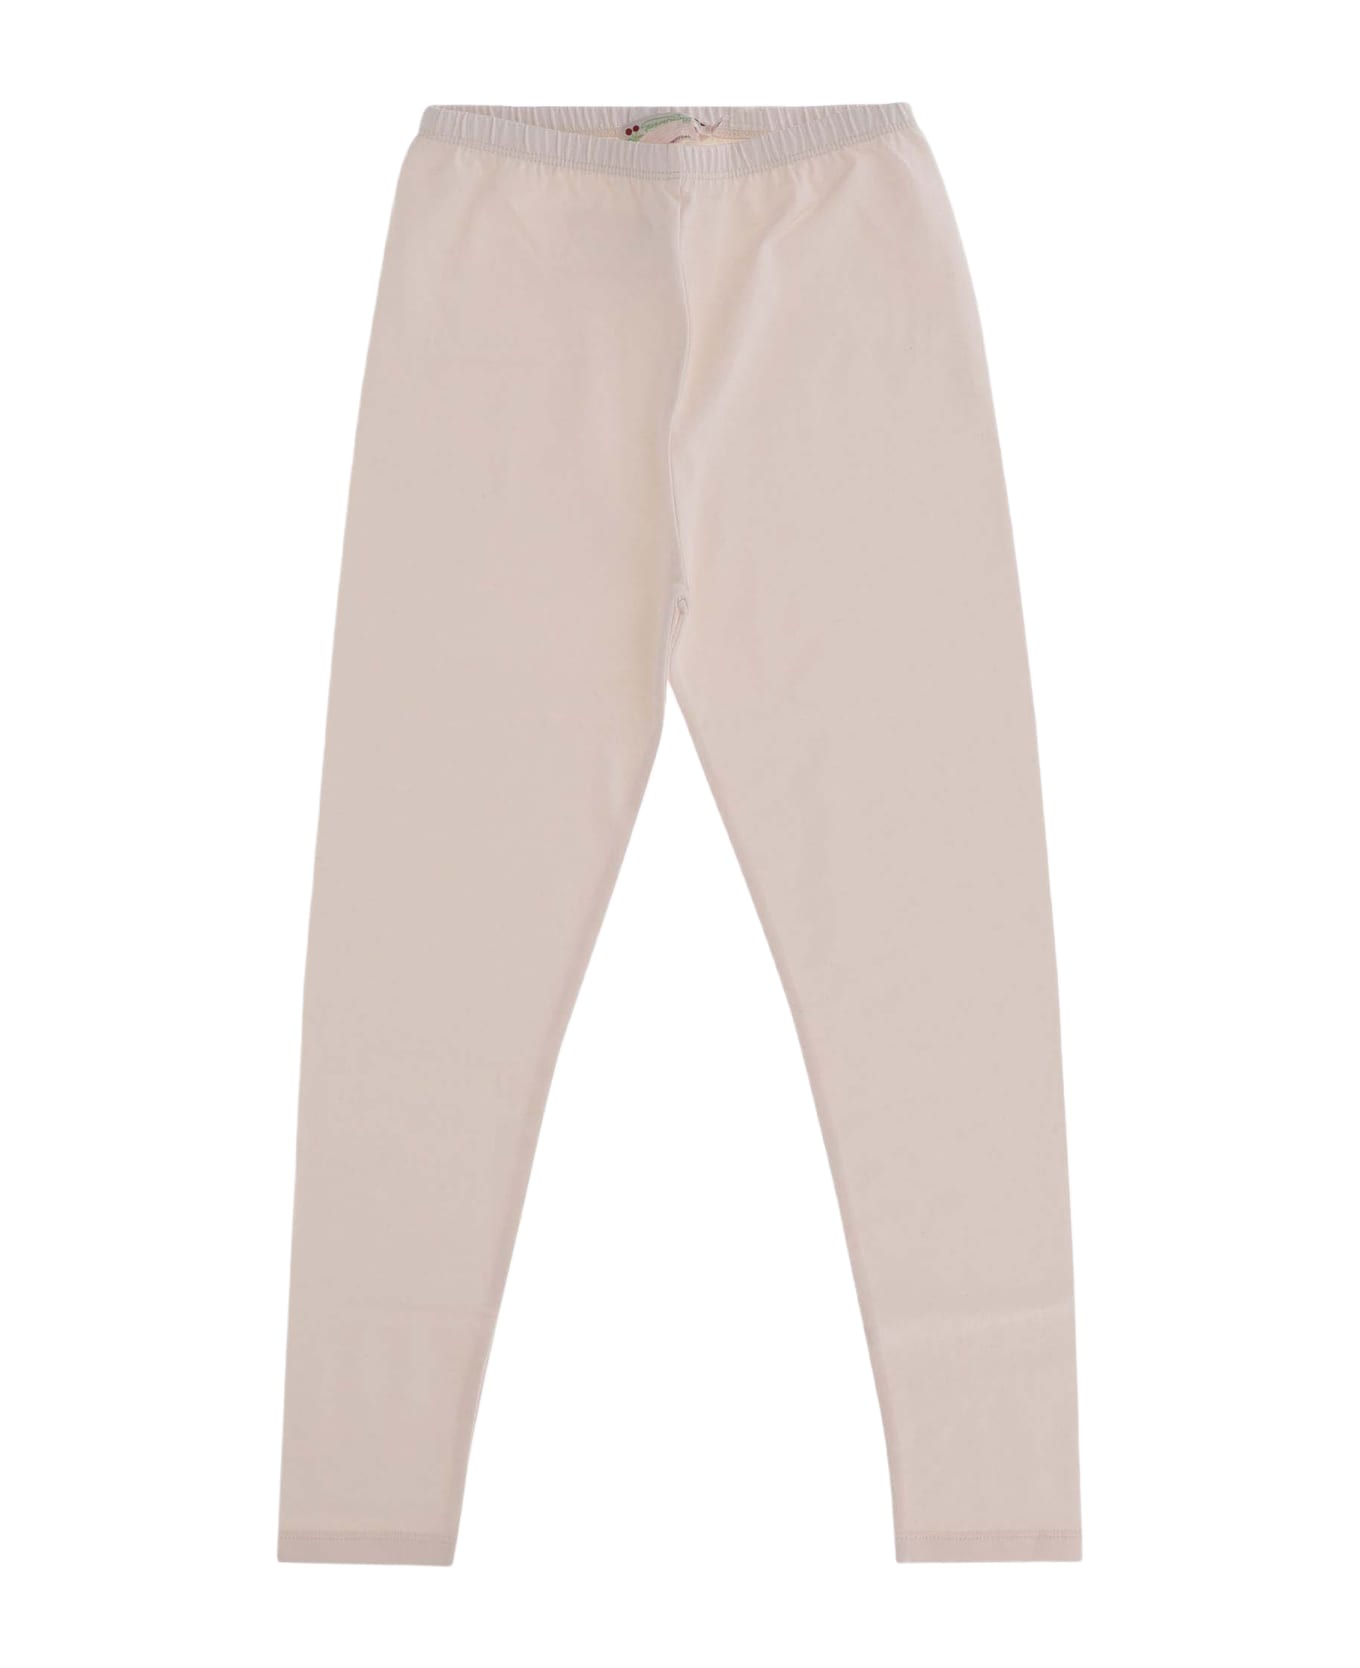 Bonpoint Stretch Cotton Leggings - Pink